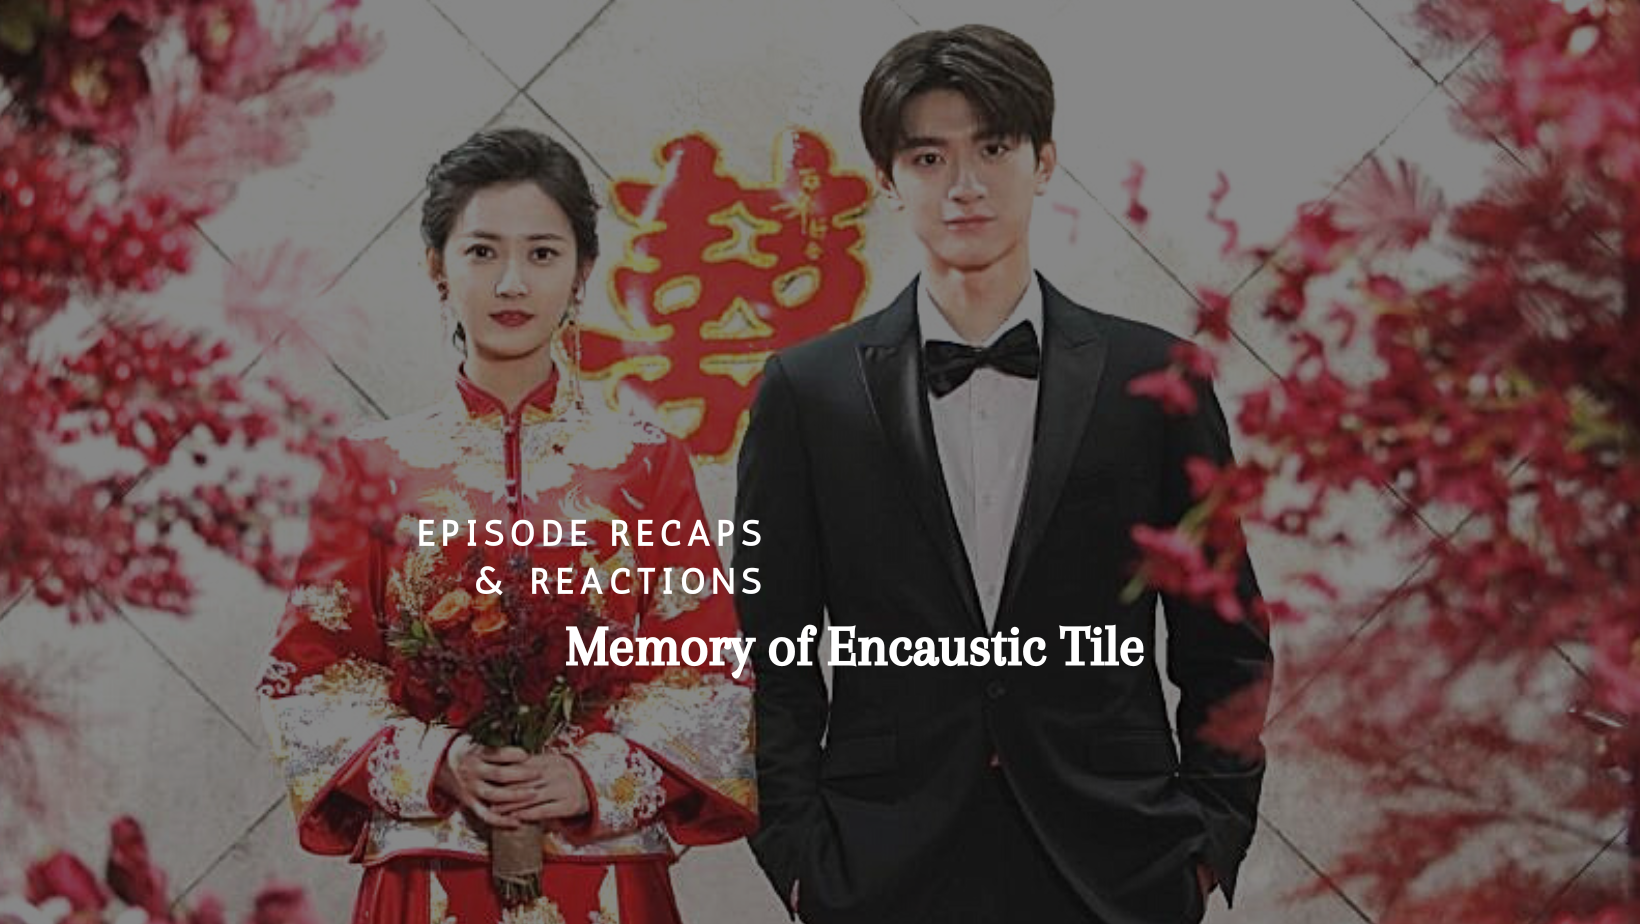 Sunian and Shao Xue's wedding